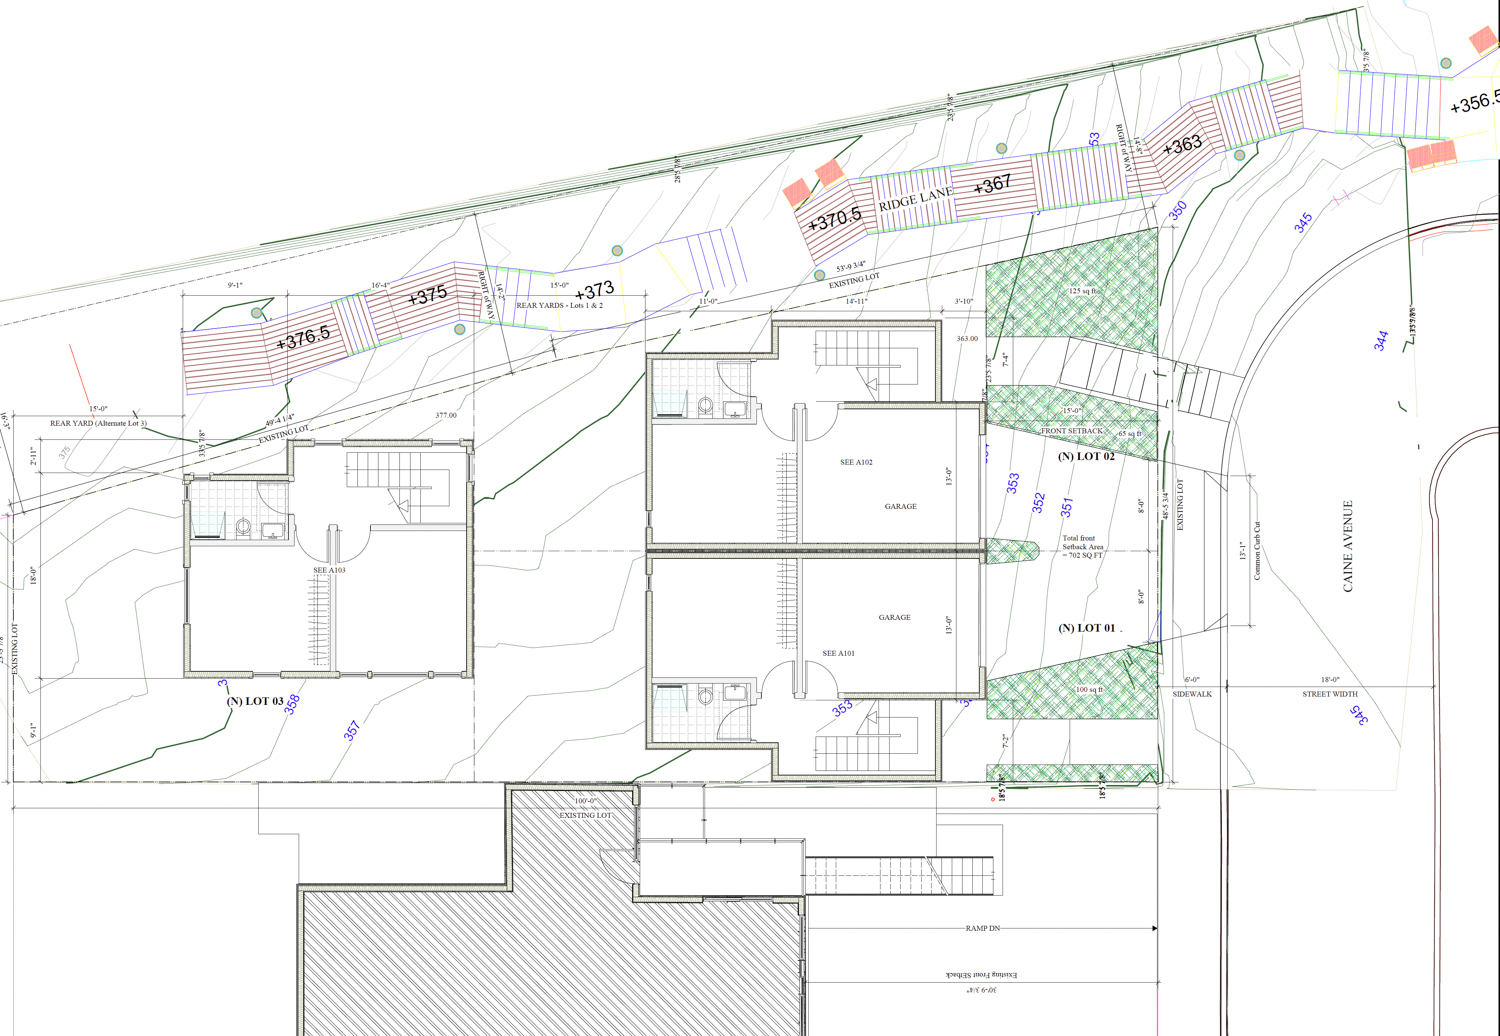 6 Caine Avenue ground-level floor plan, illustration by Stephen Antonaros Architect